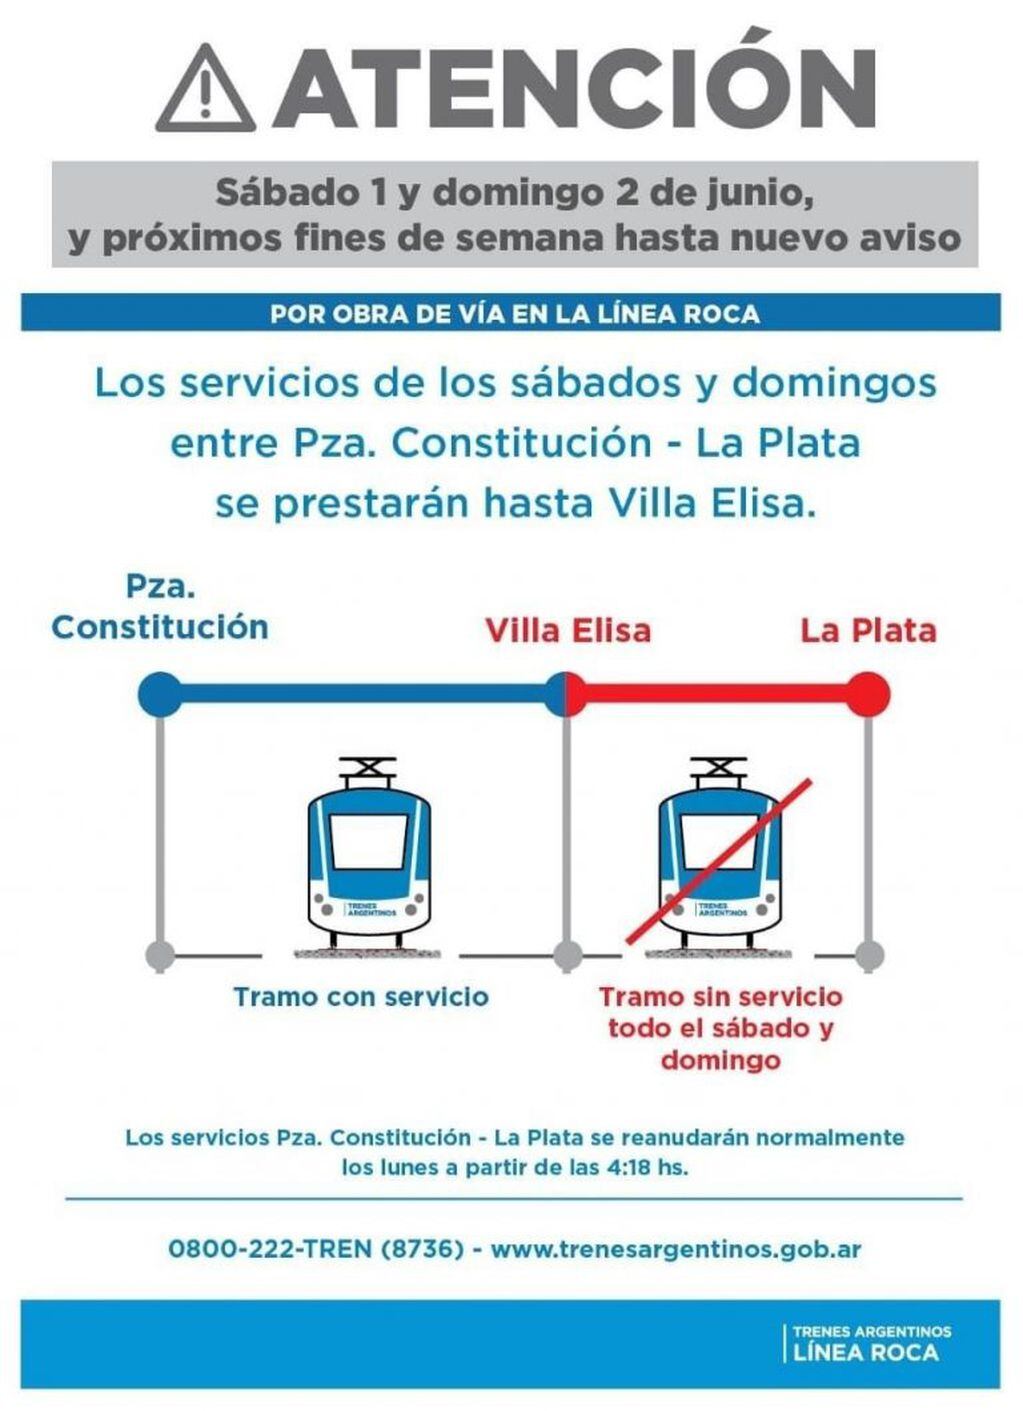 Trenes argentinos (web)